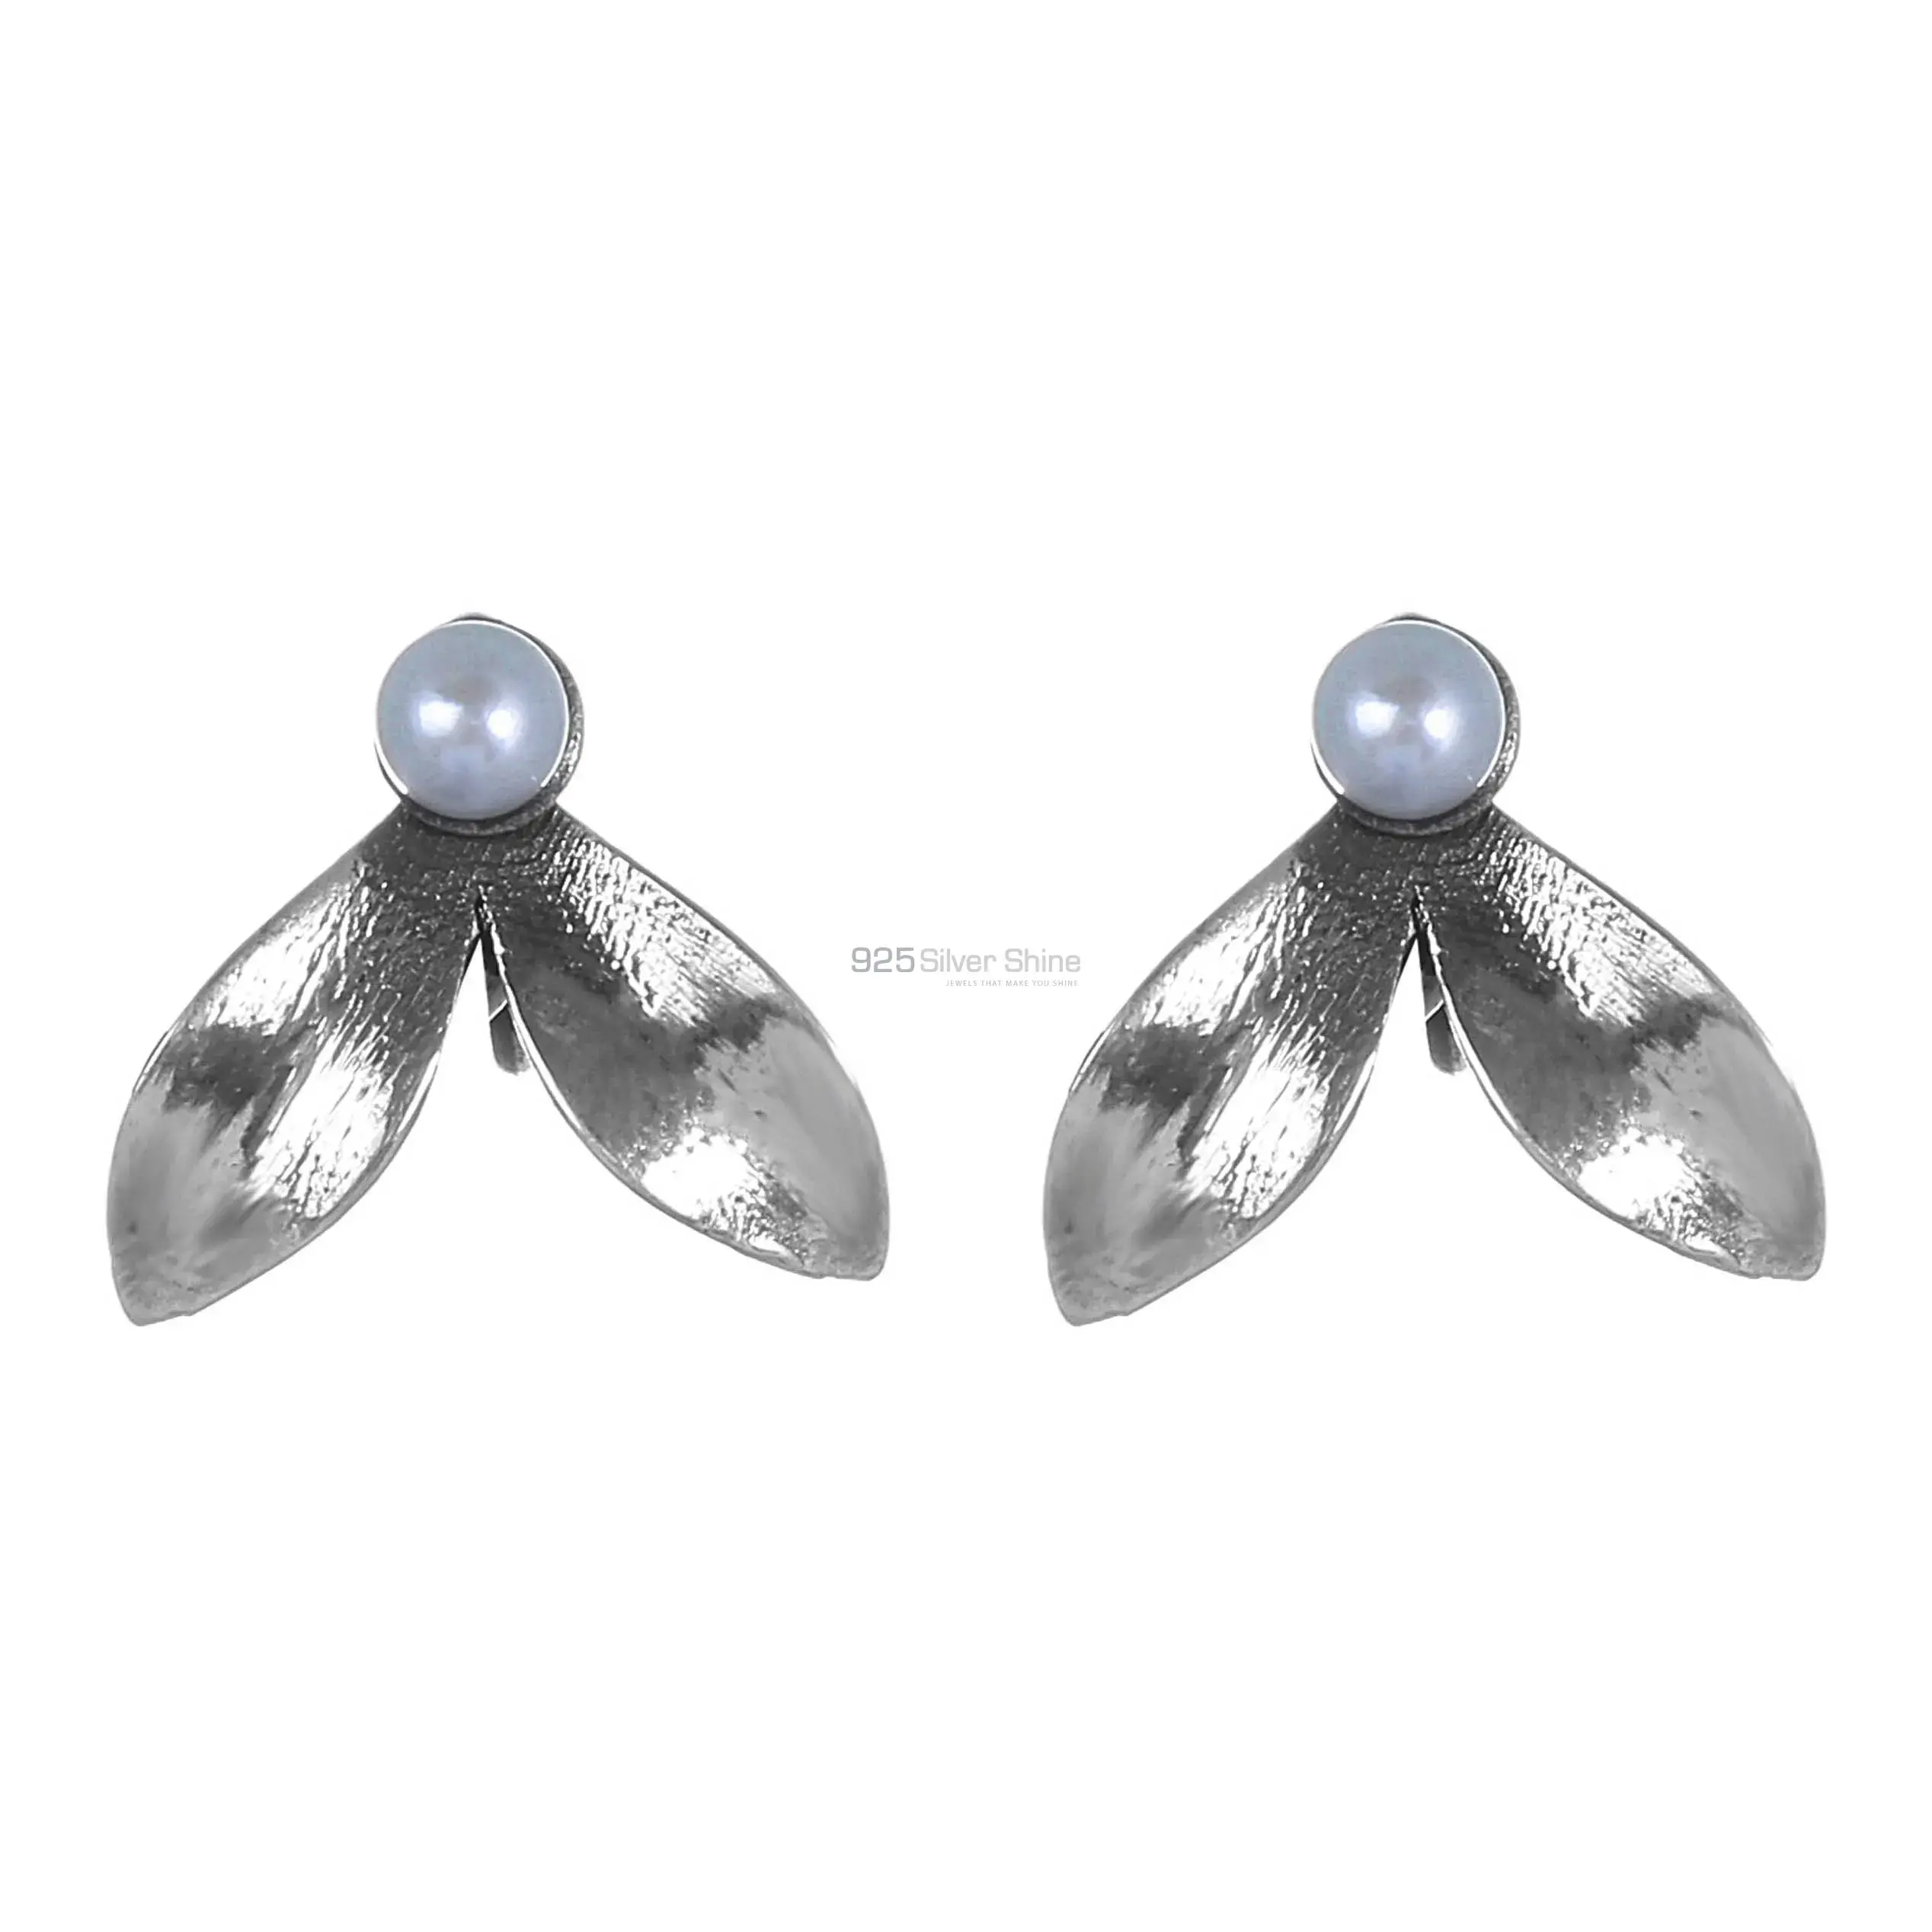 925 Sterling Silver Handmade Earrings Exporters In Pearl Gemstone Jewelry 925SE273